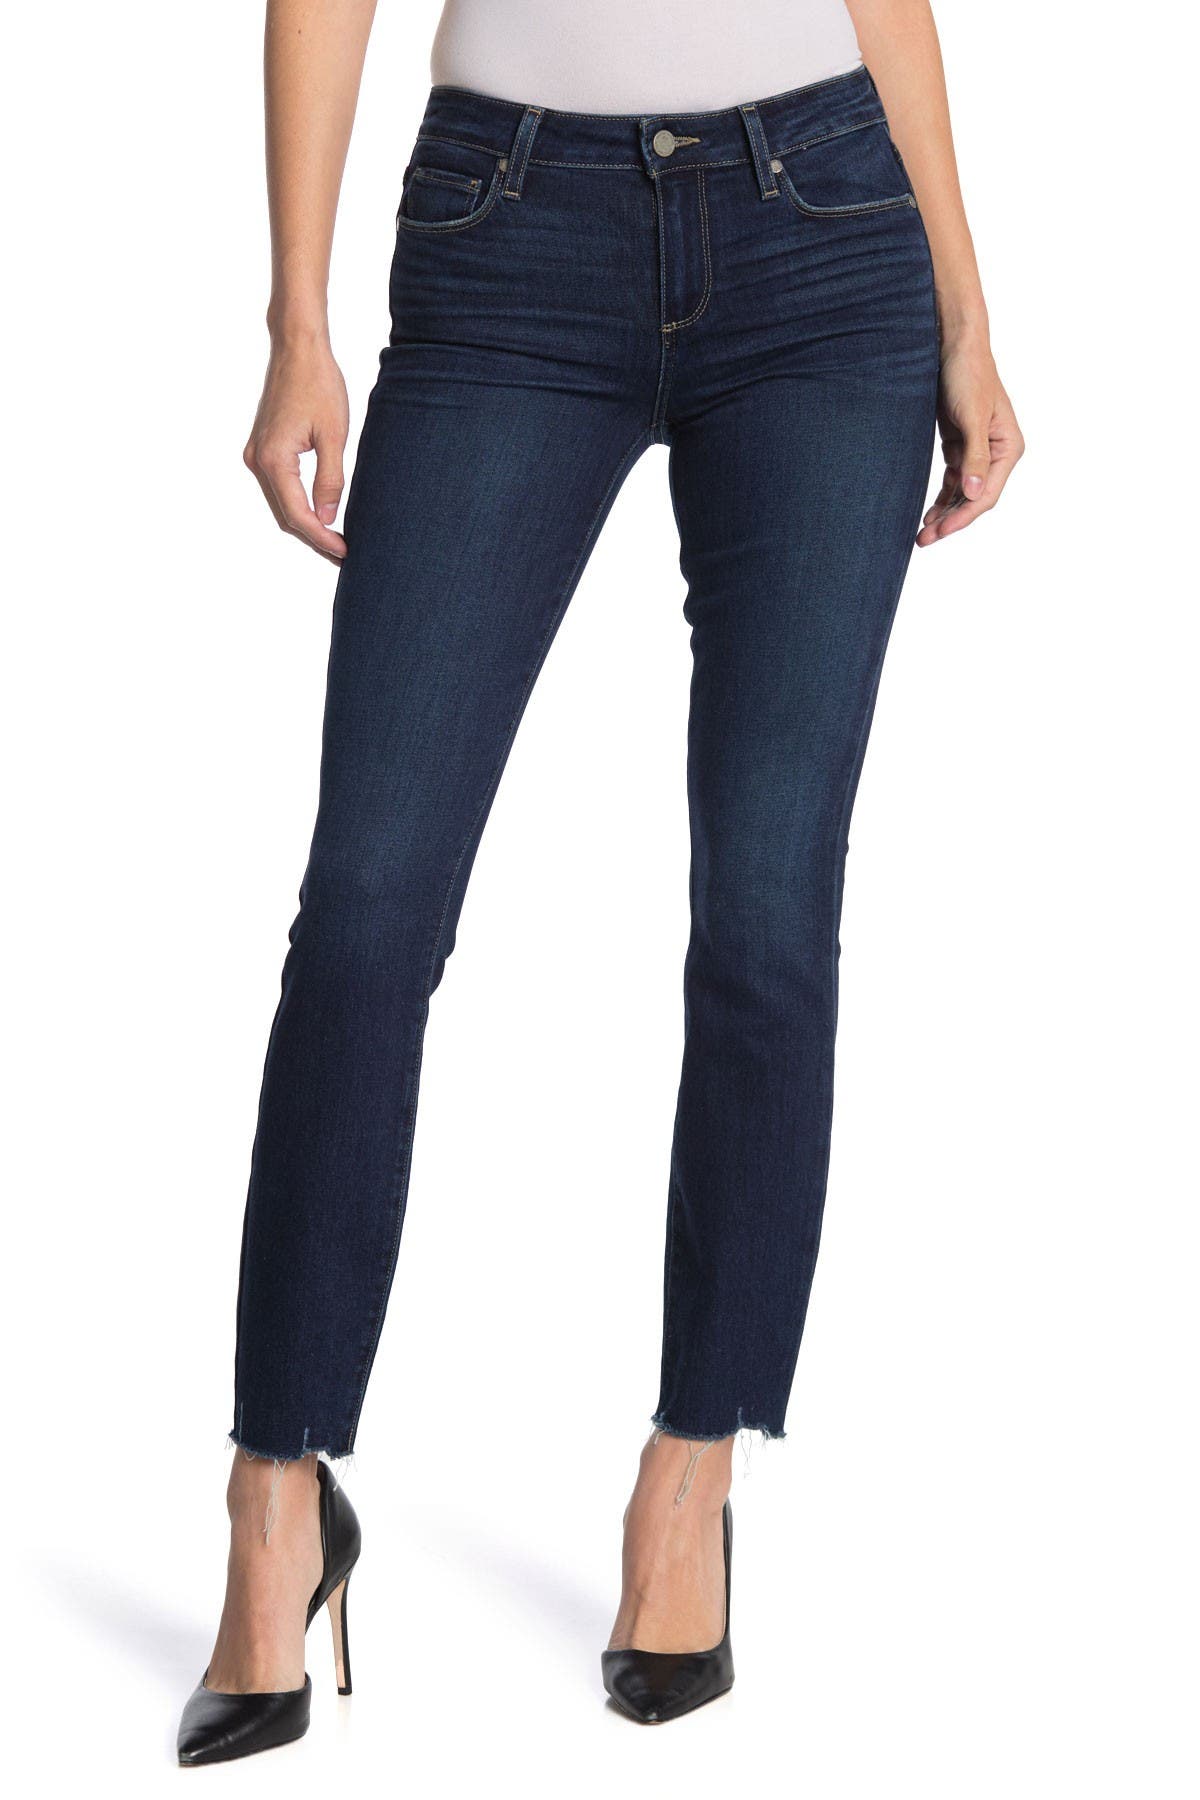 Paige Womens Verdugo Denim Skinny Mid-Rise Ankle Jeans BHFO 4584 